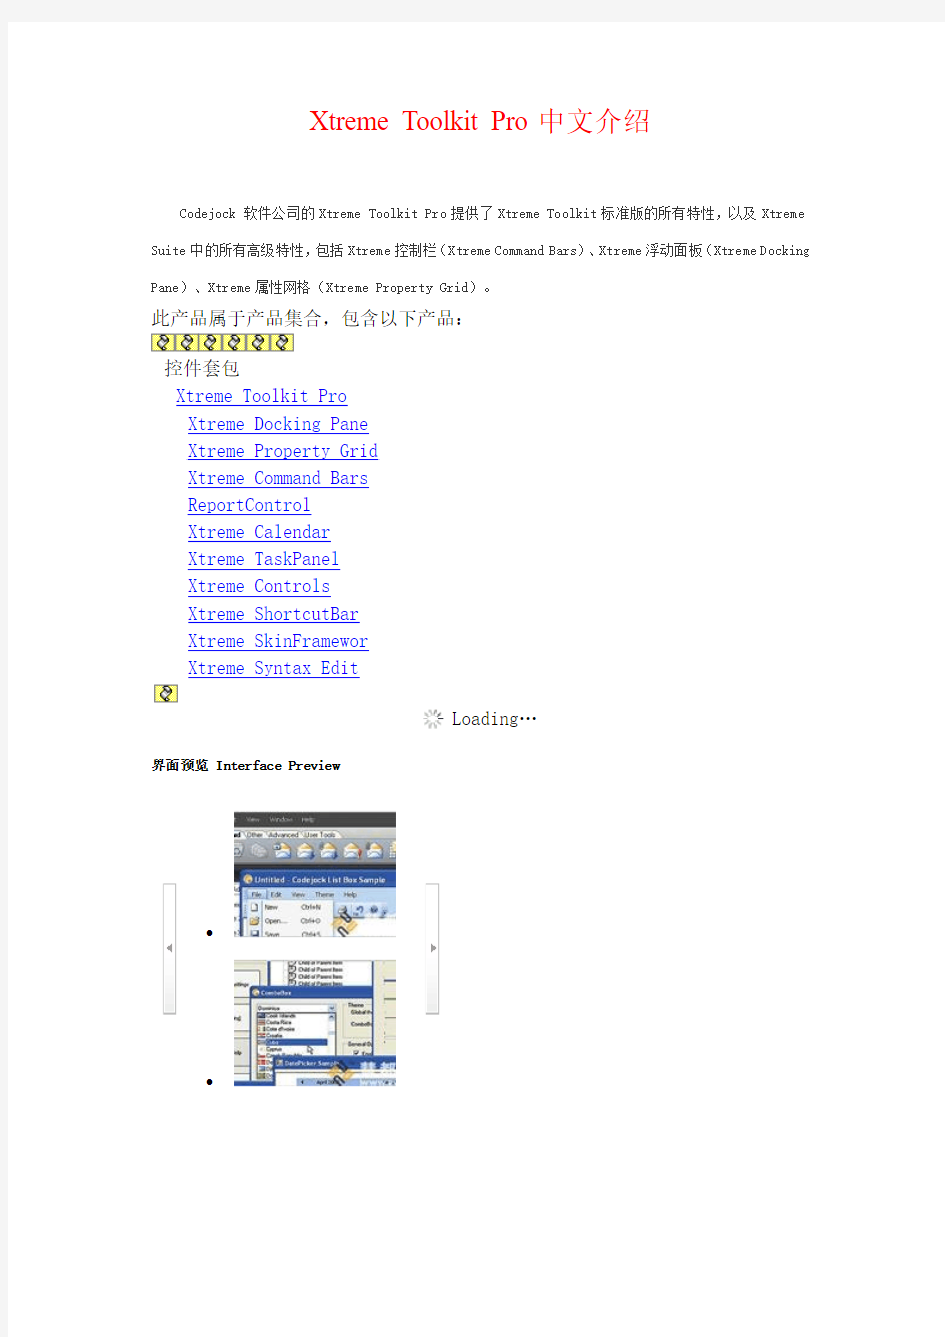 Xtreme Toolkit Pro中文介绍